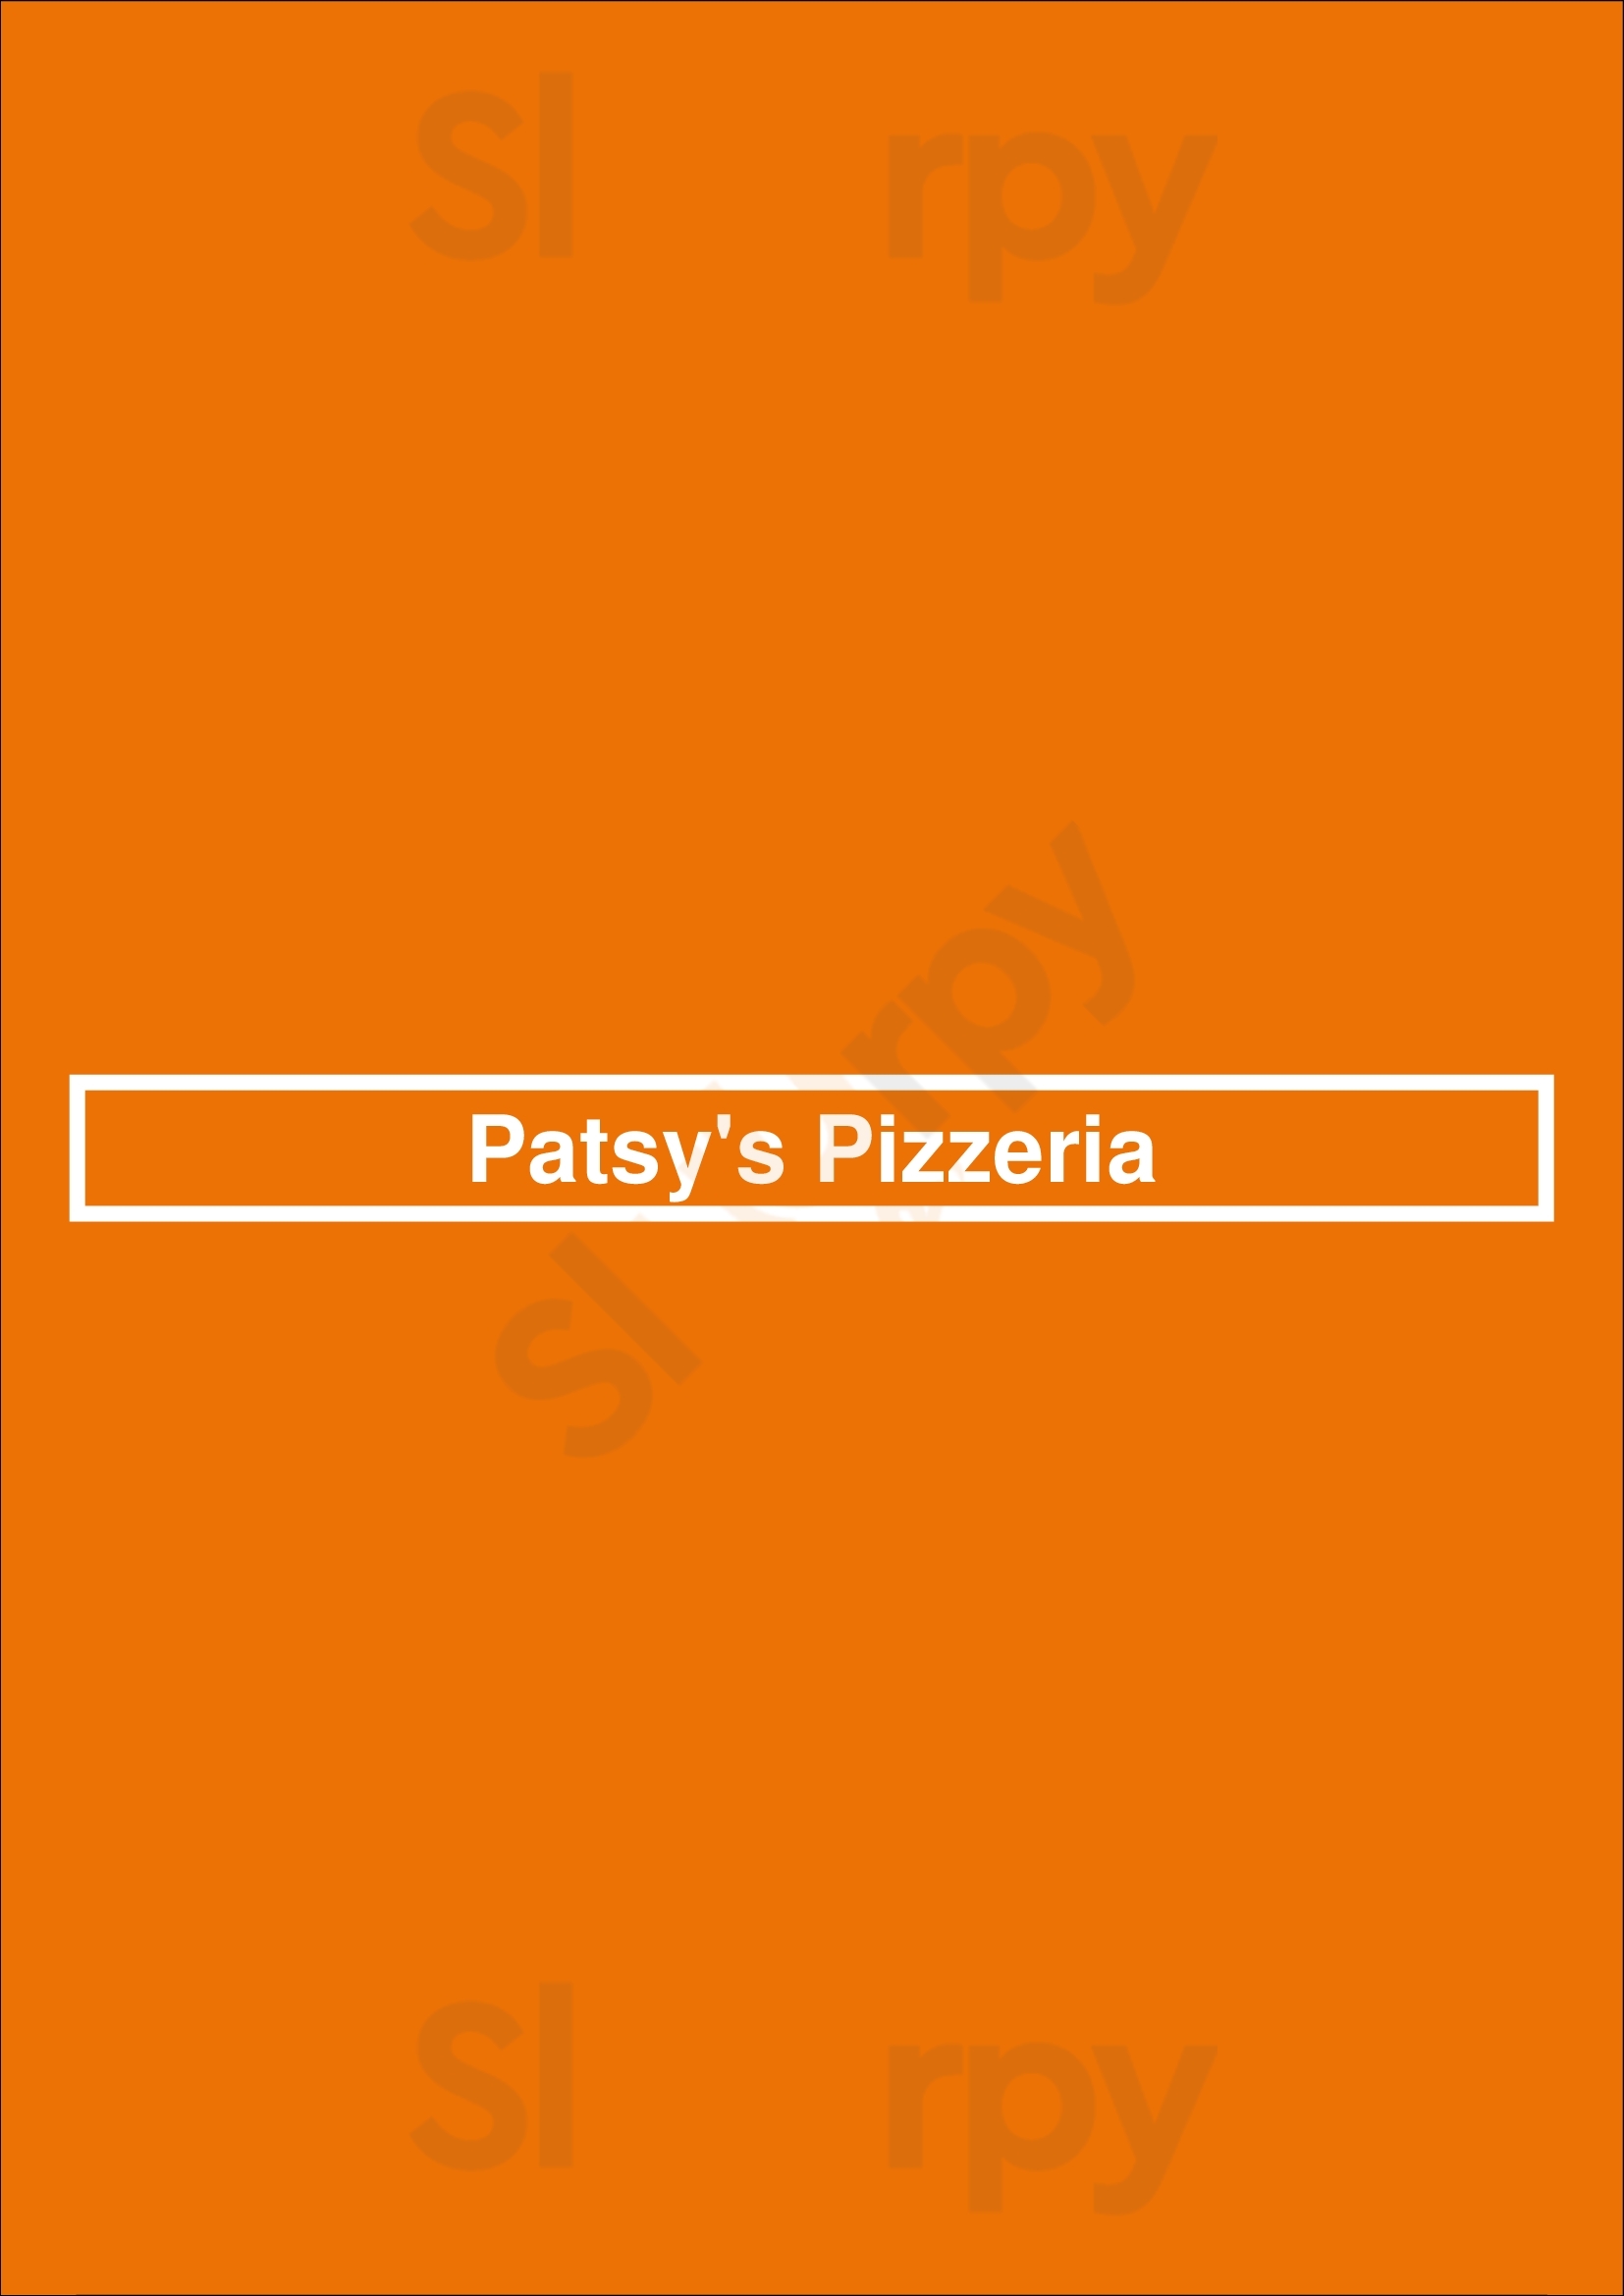 Patsy's Pizzeria New York City Menu - 1